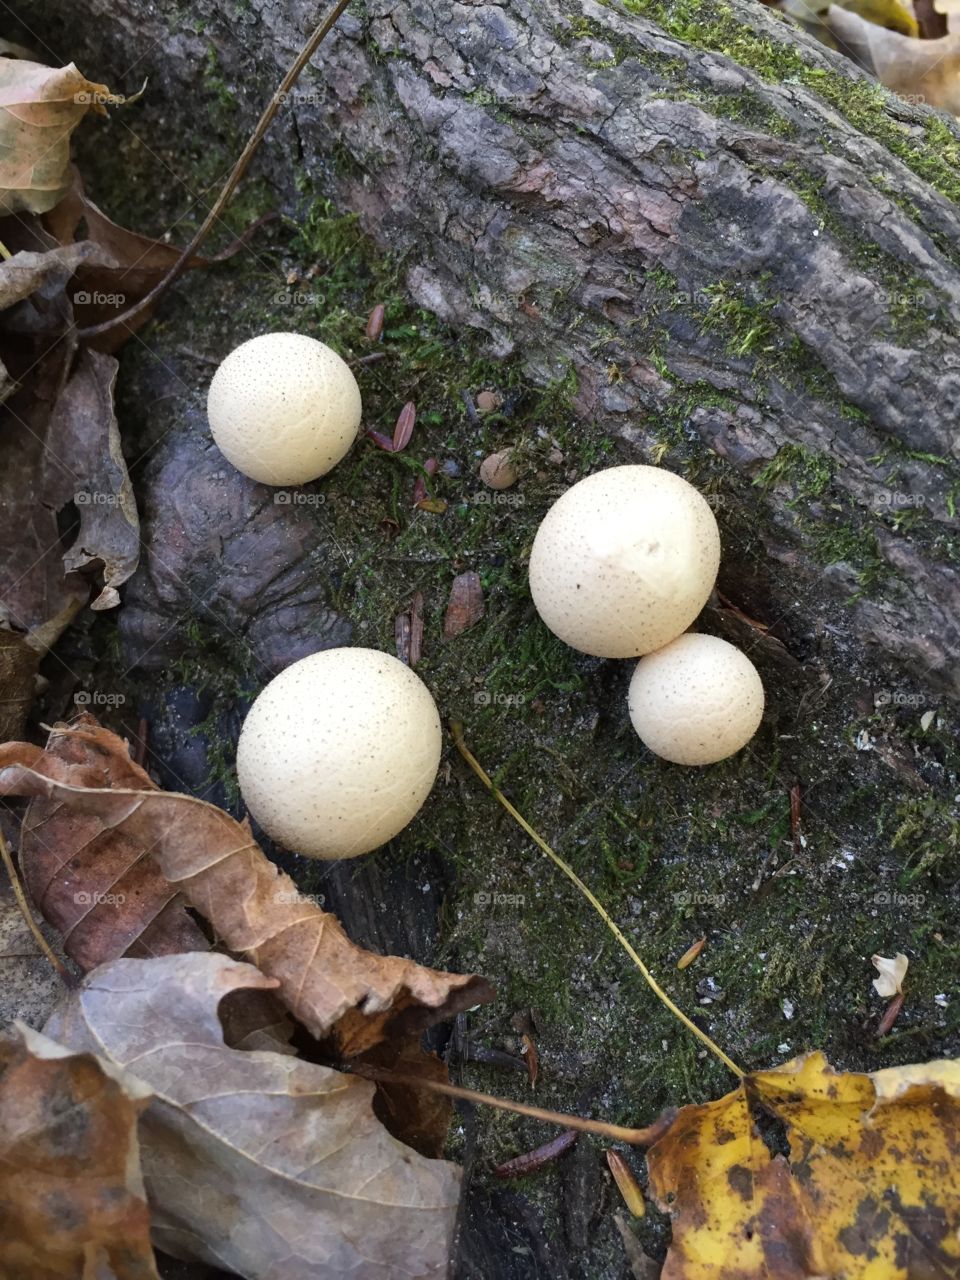 Strange gum ball shaped mushrooms 